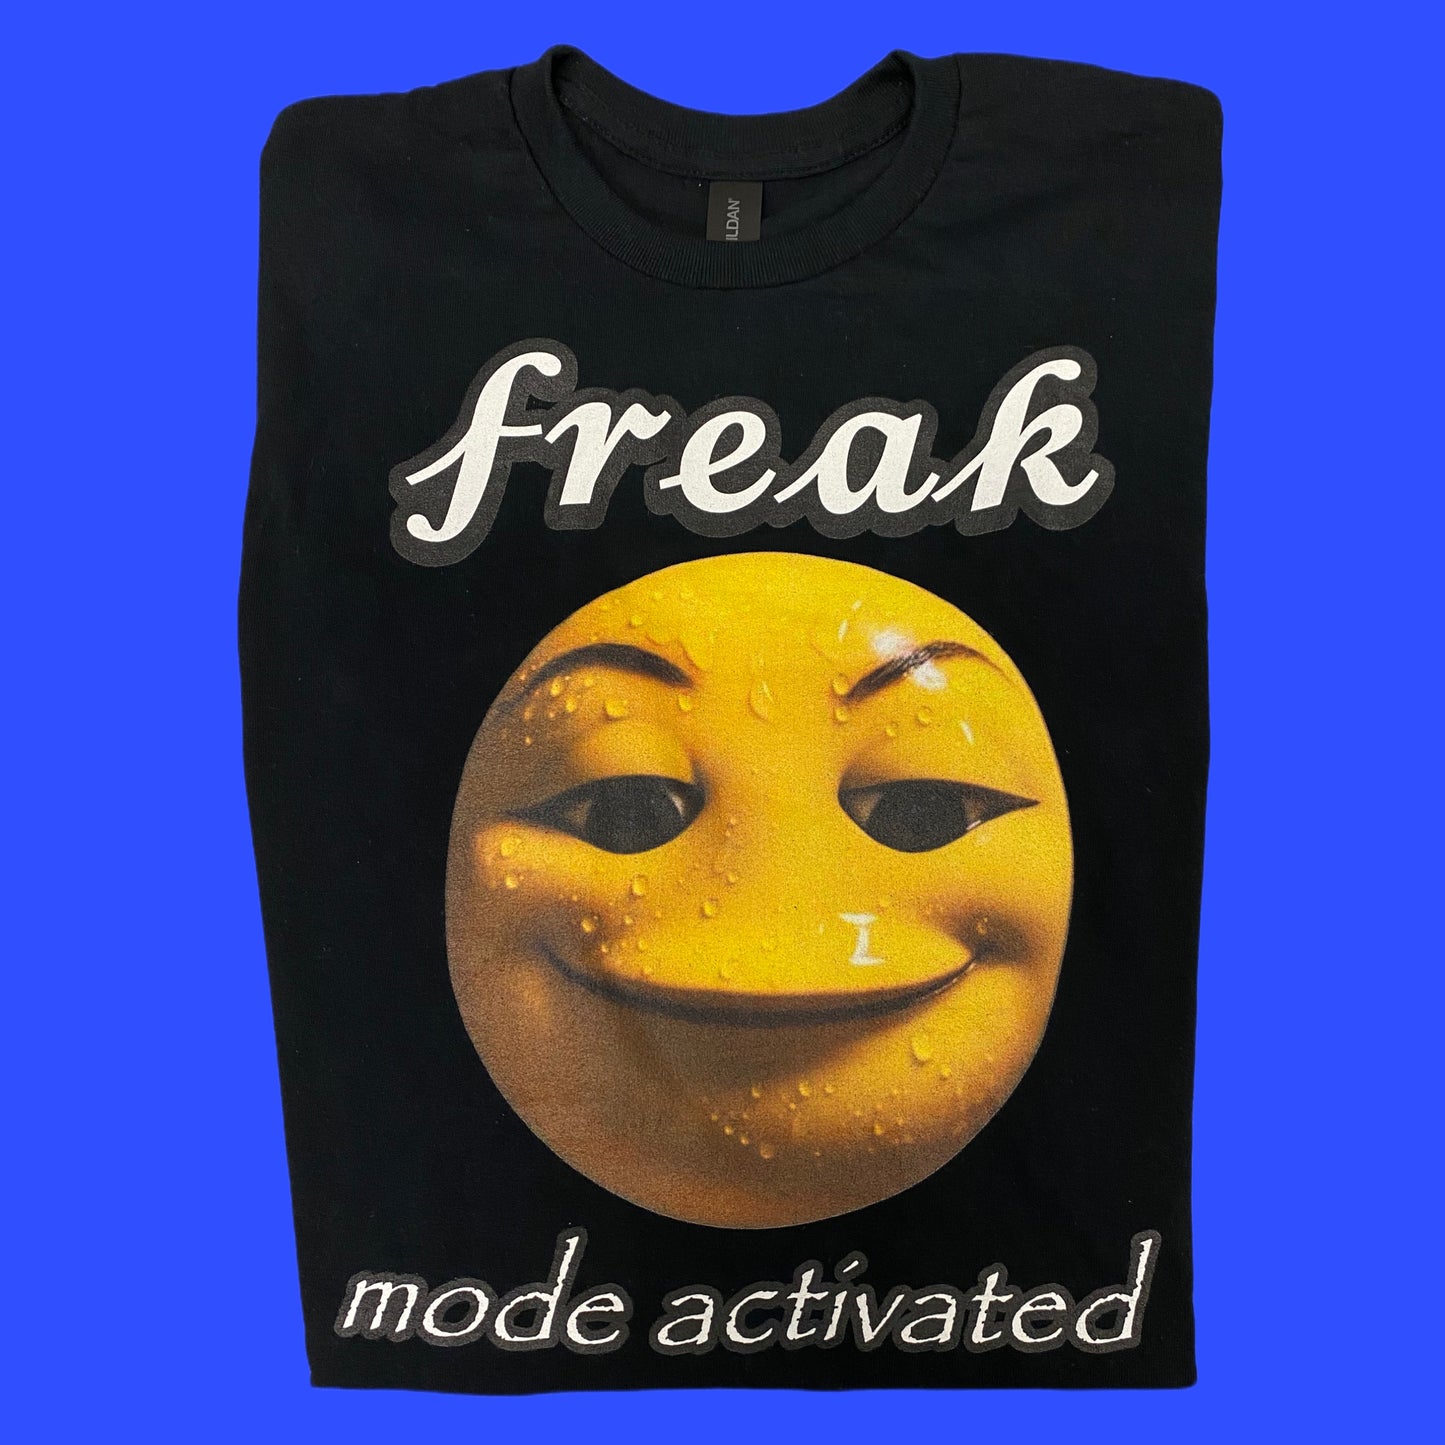 Freak mode activated